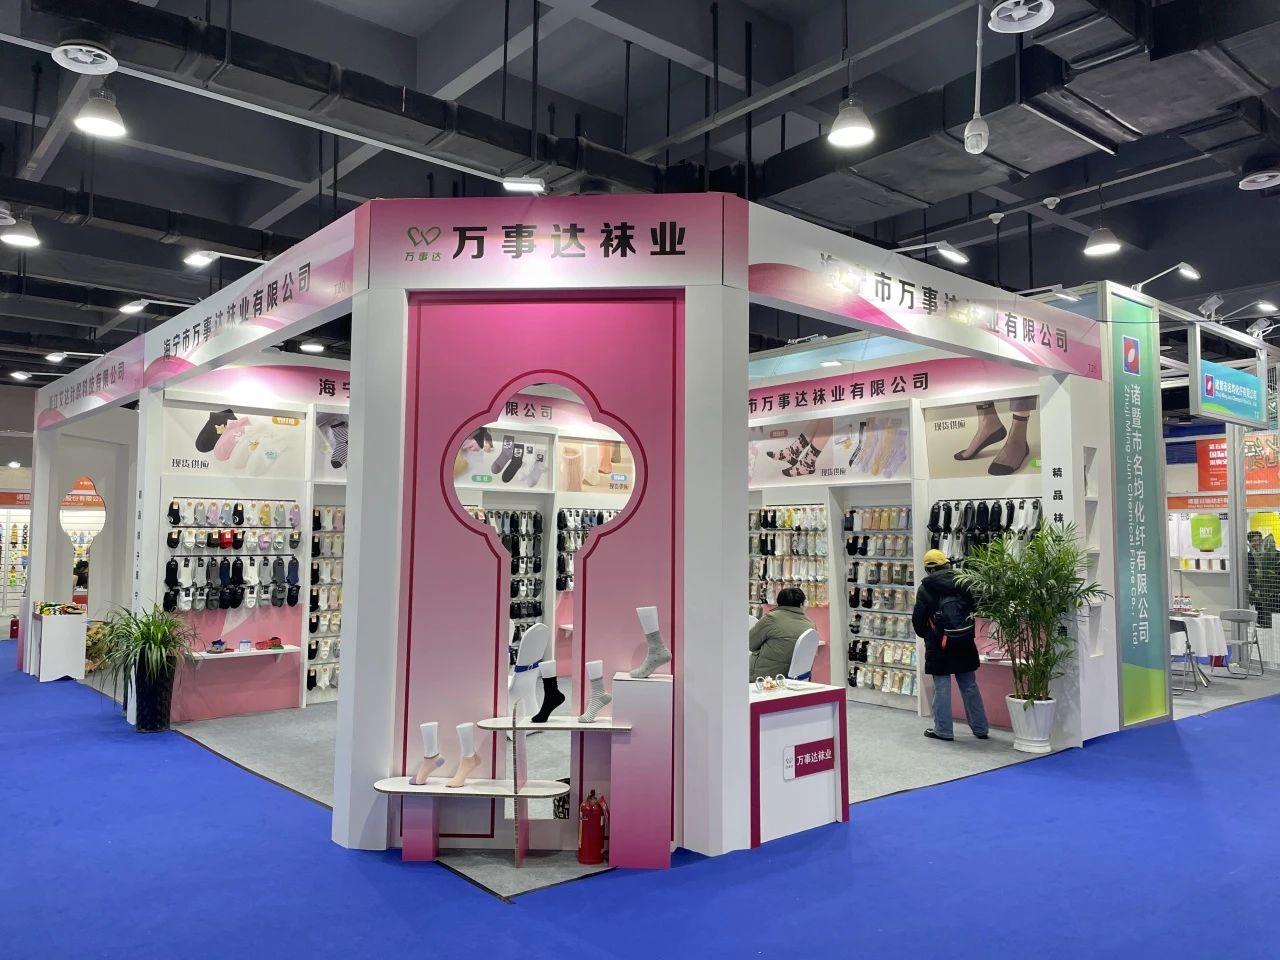 Enter the 5th China Haining International Fashion Socks Purchasing Fair